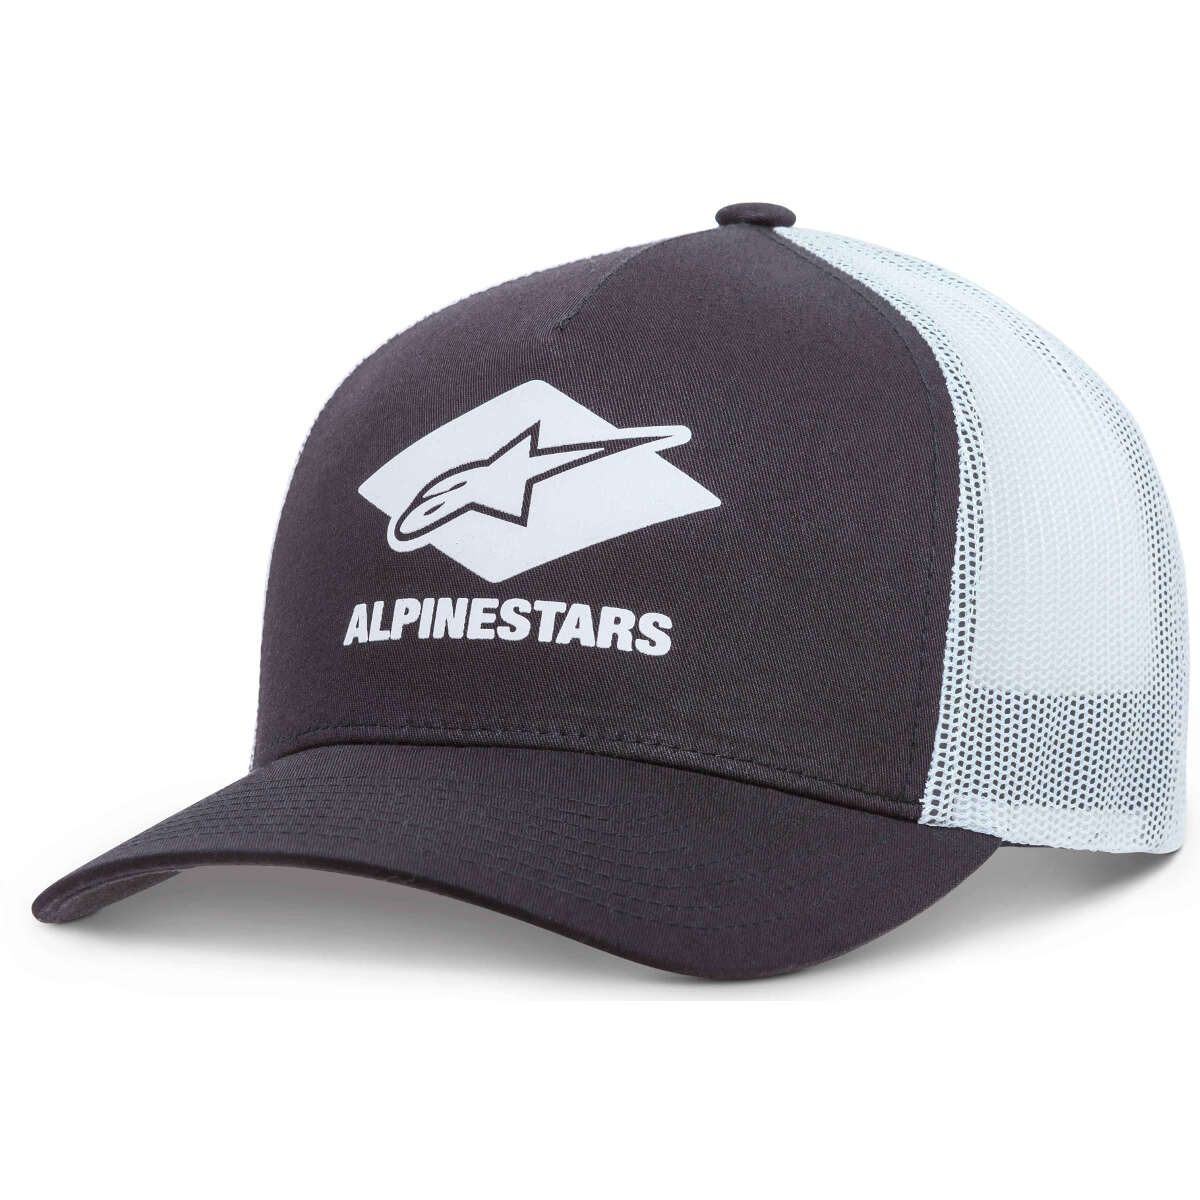 Alpinestars Trucker Cap Diamond Black